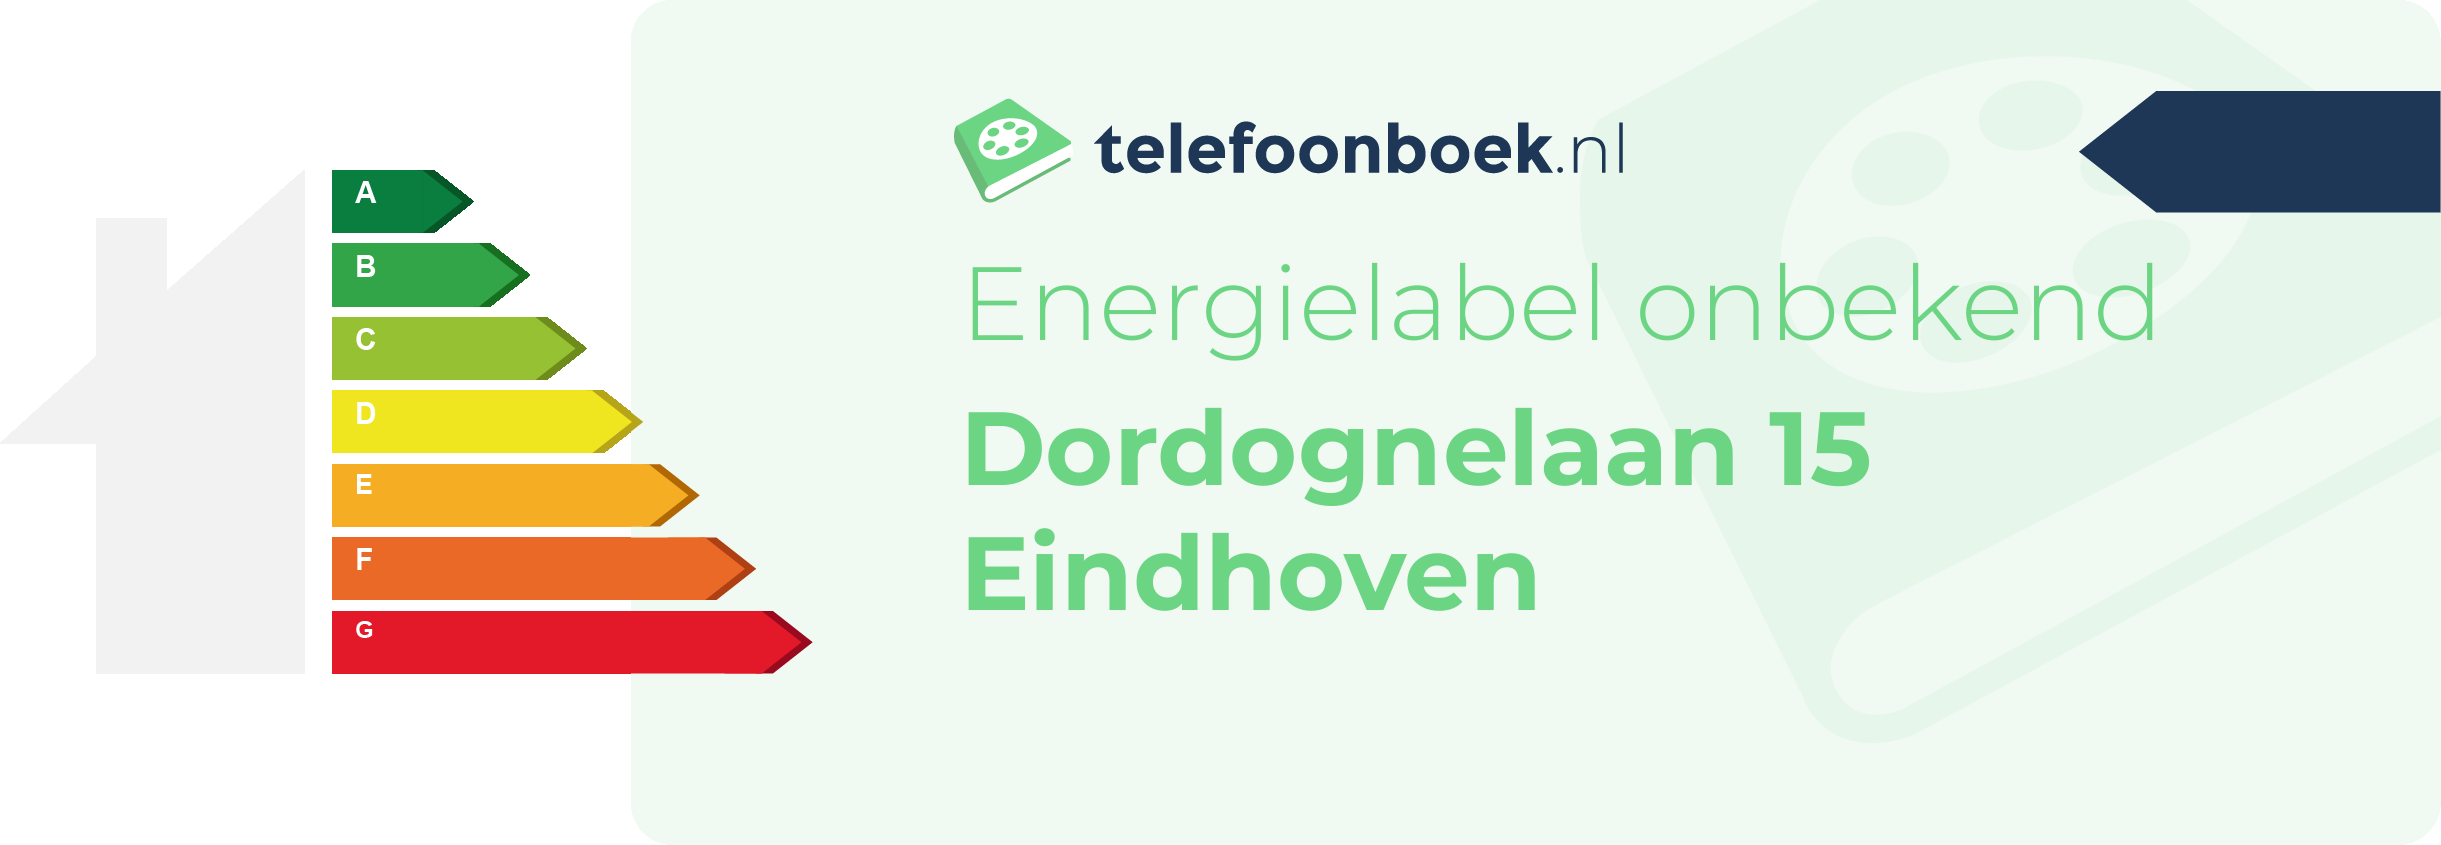 Energielabel Dordognelaan 15 Eindhoven